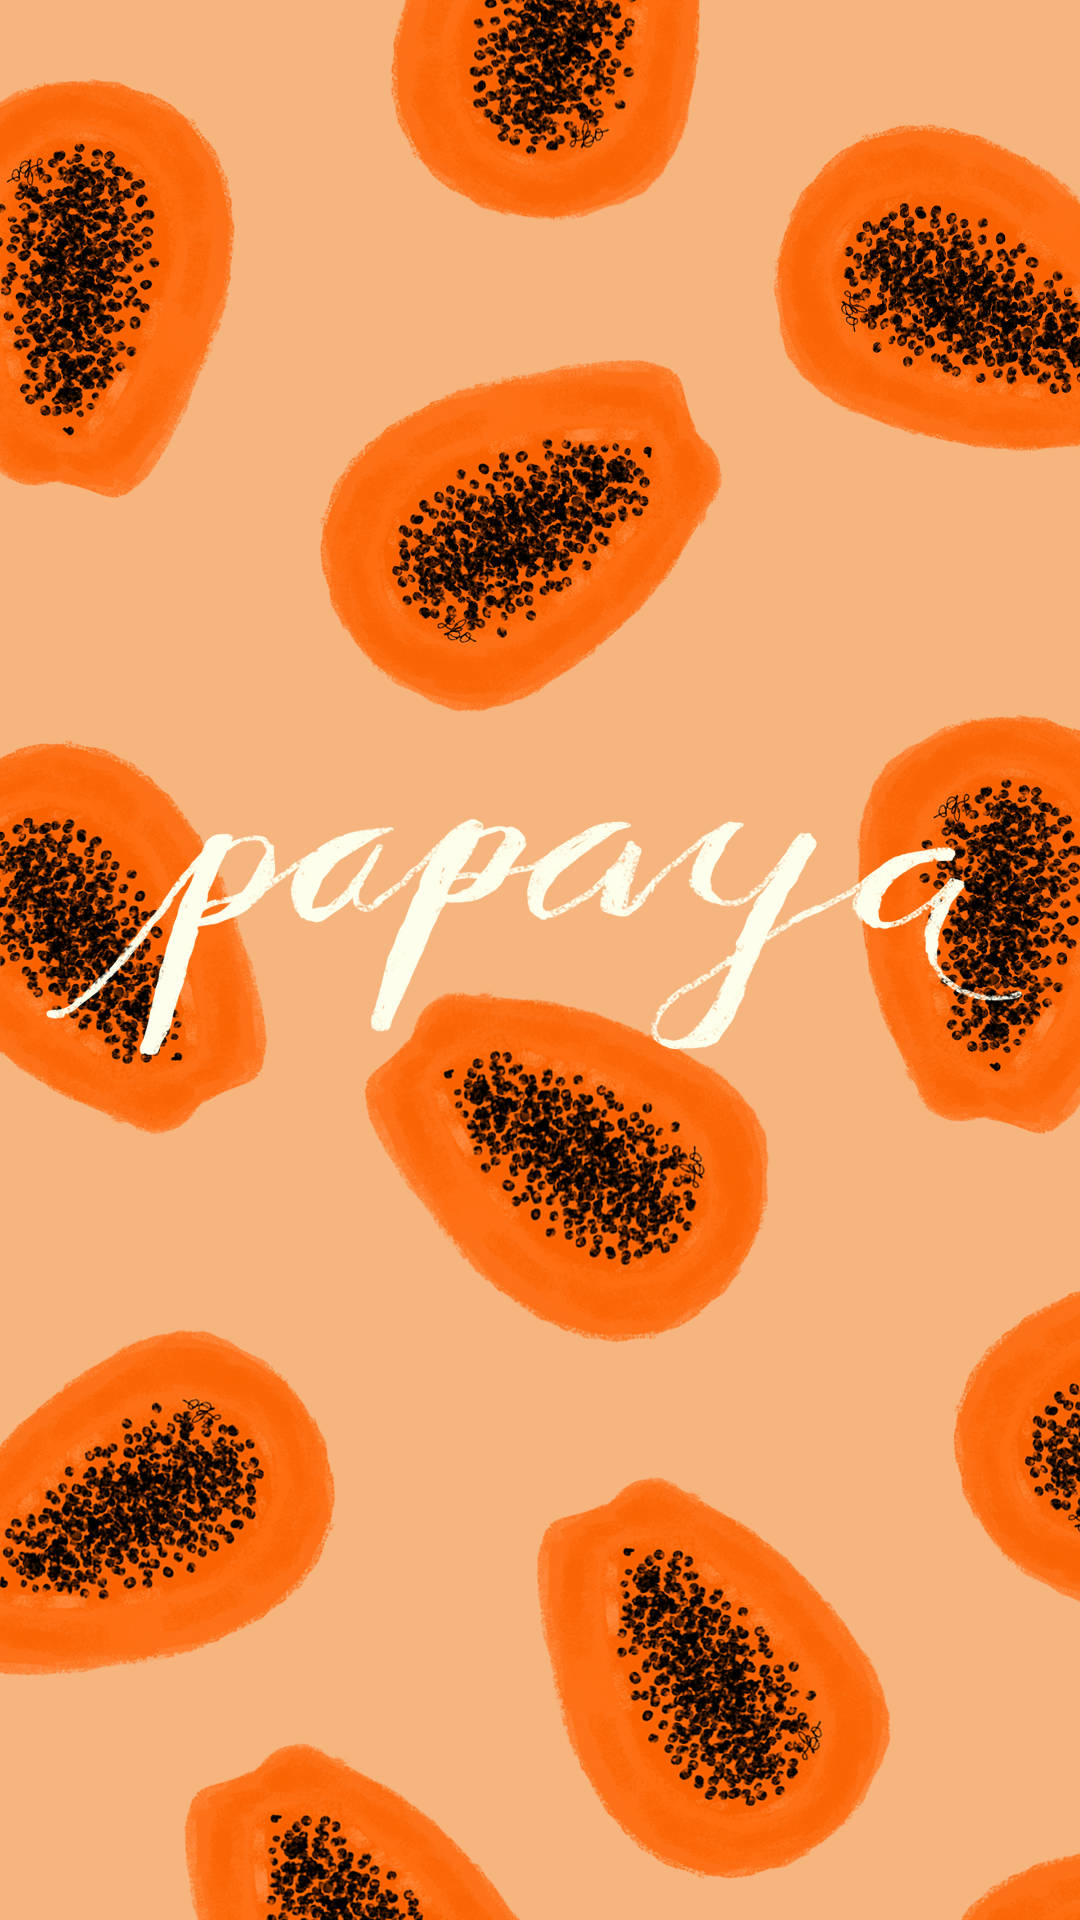 Sliced Orange Papaya Fruits Digital Art Wallpaper